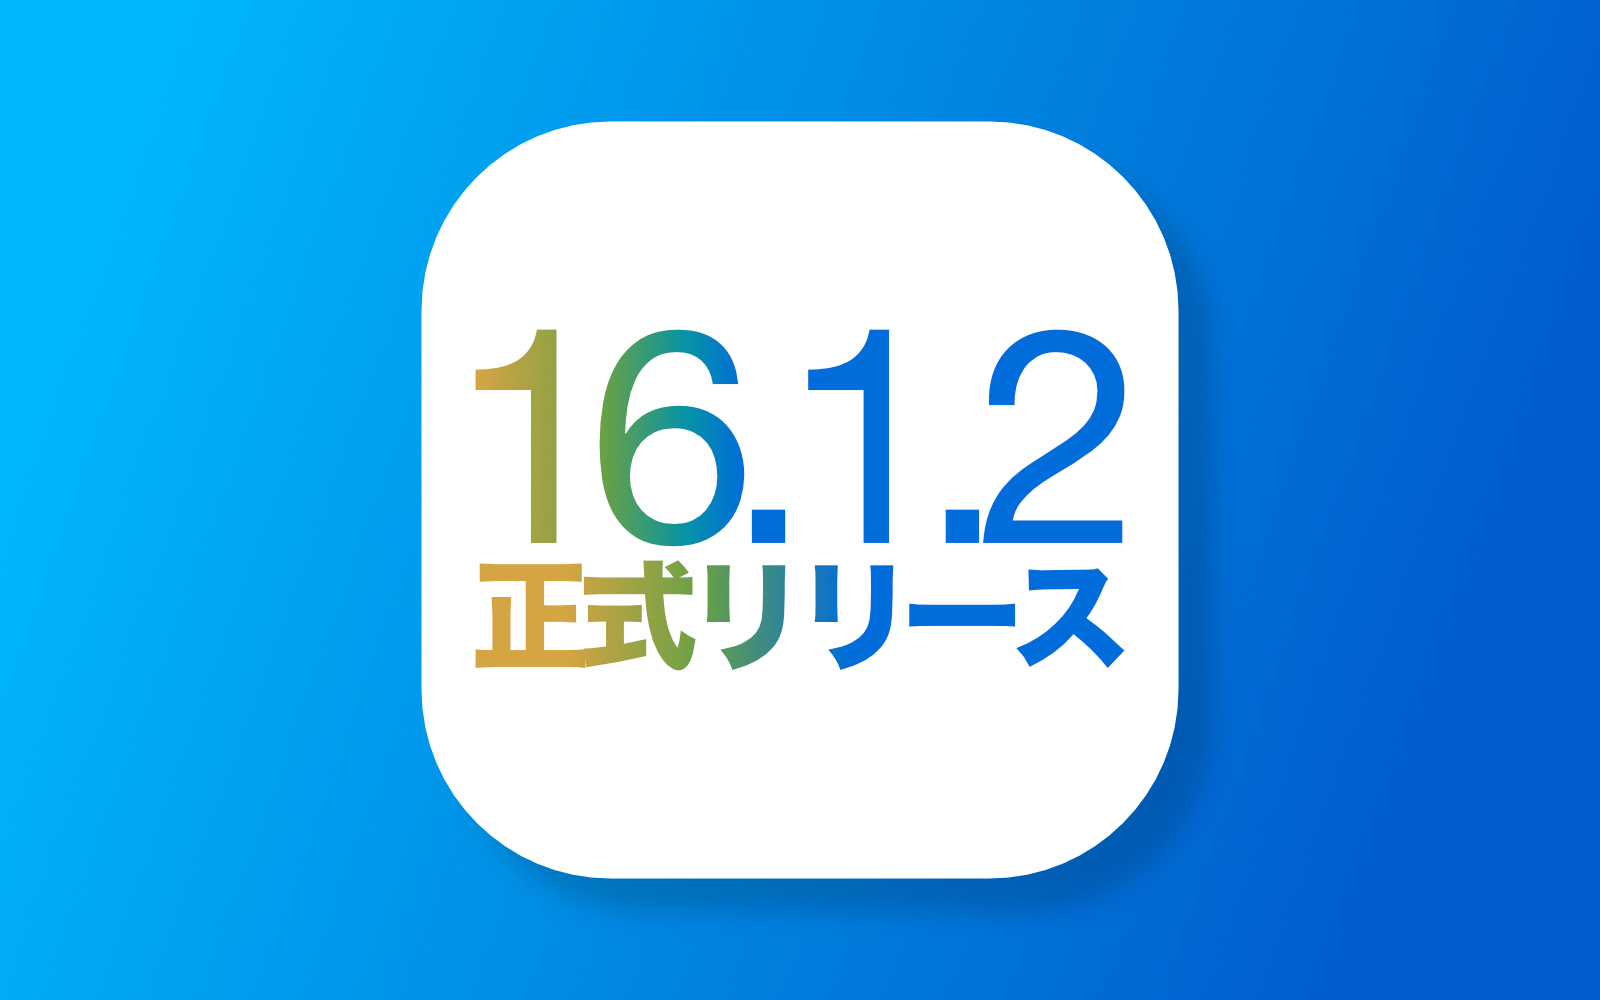 IOS16 1 2 update release